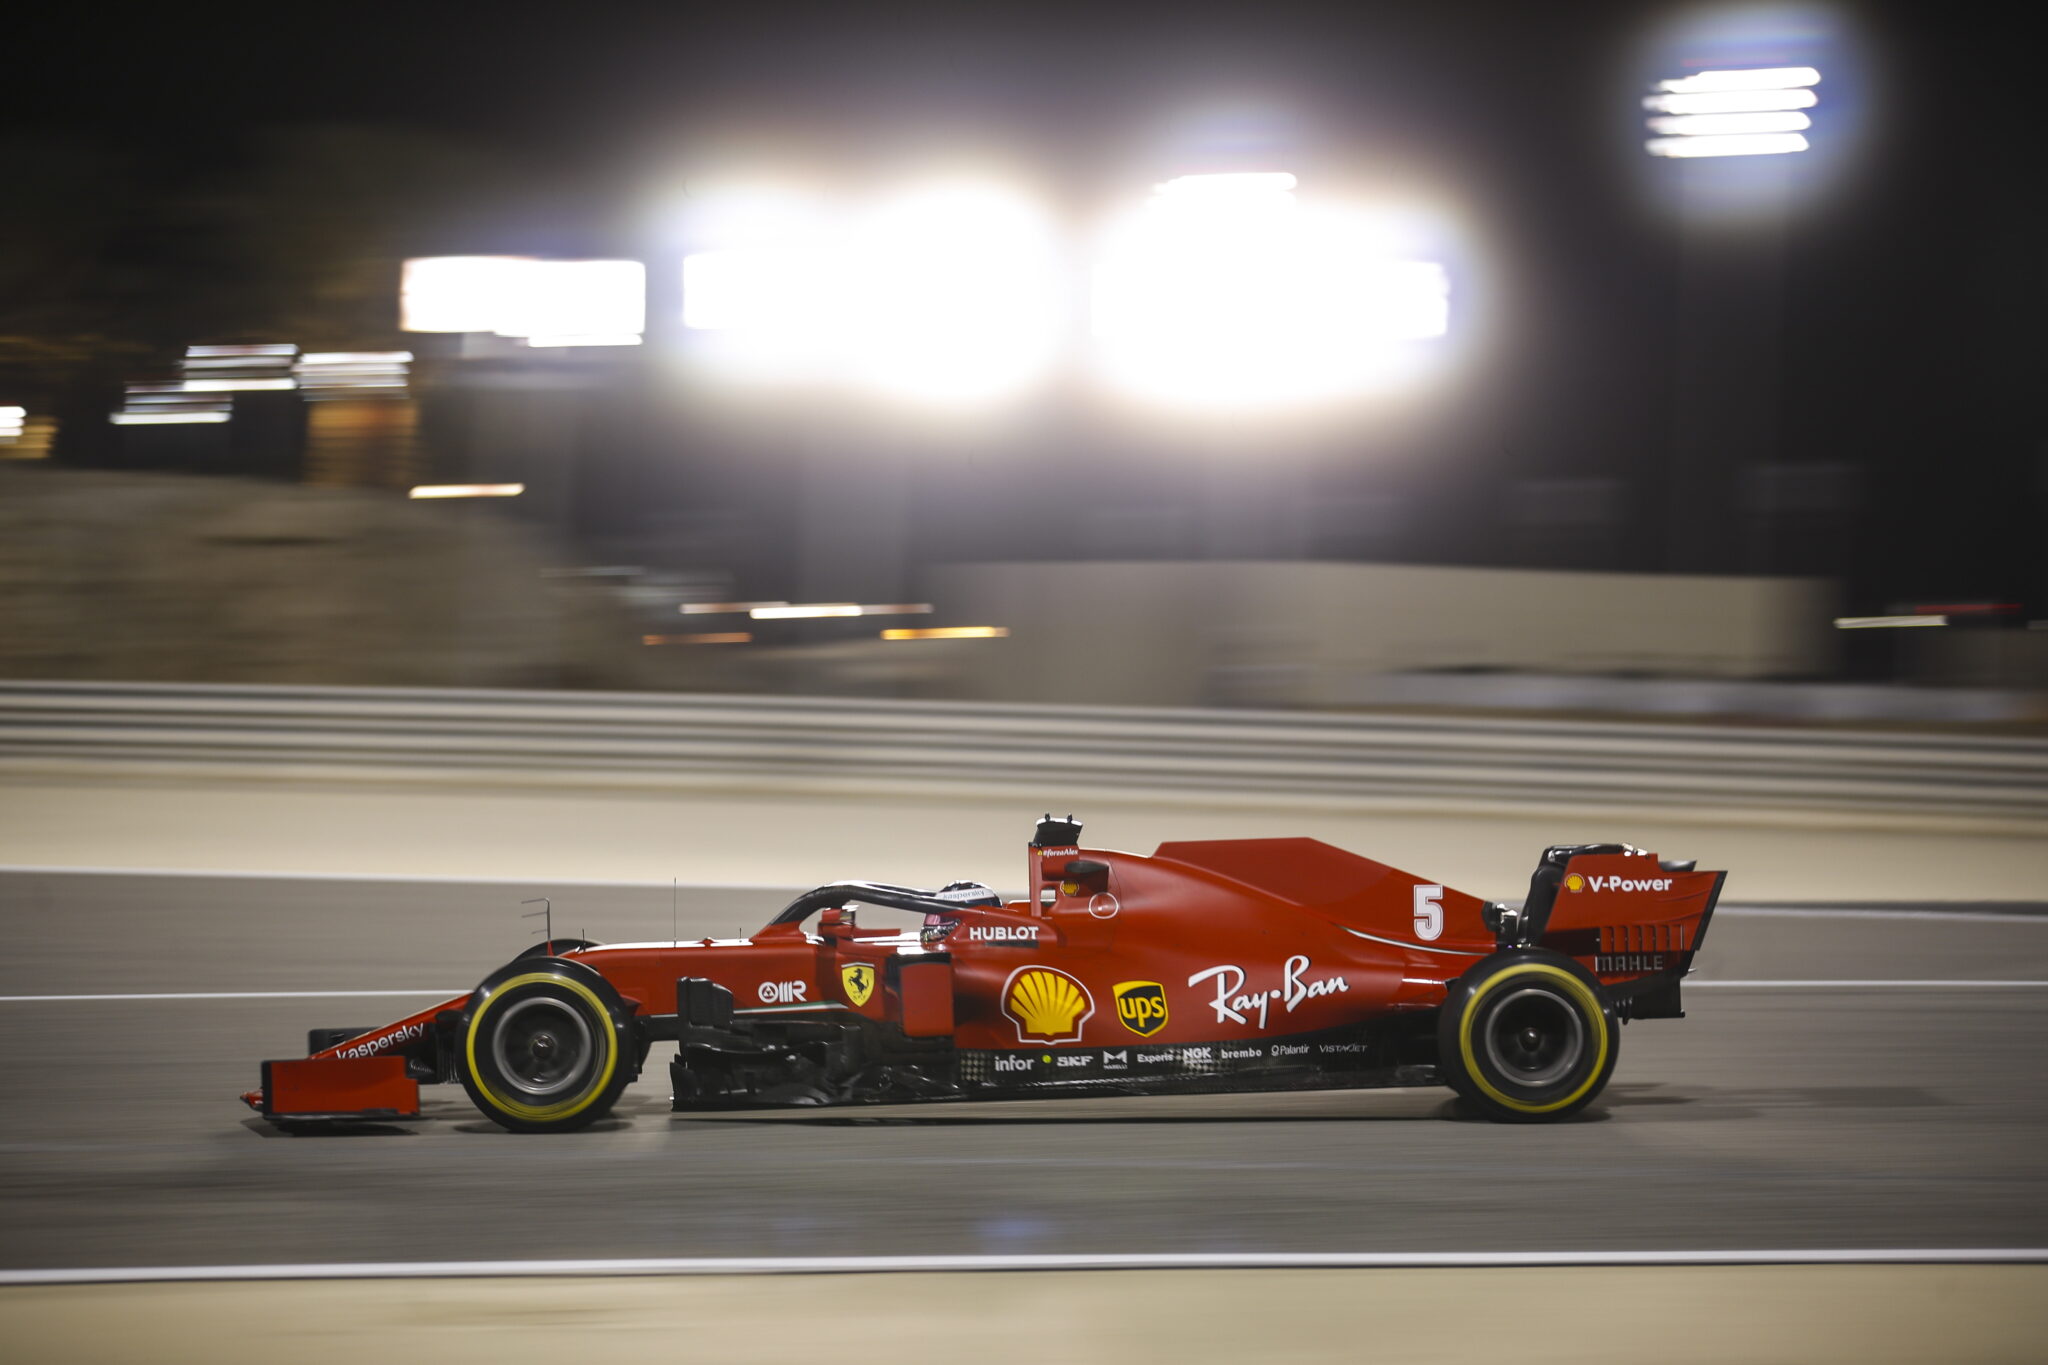  Sesja treningowa Formuły 1 Grand Prix Sakhira na torze Bahrain, fot. EPA / Kamran Jebreili 